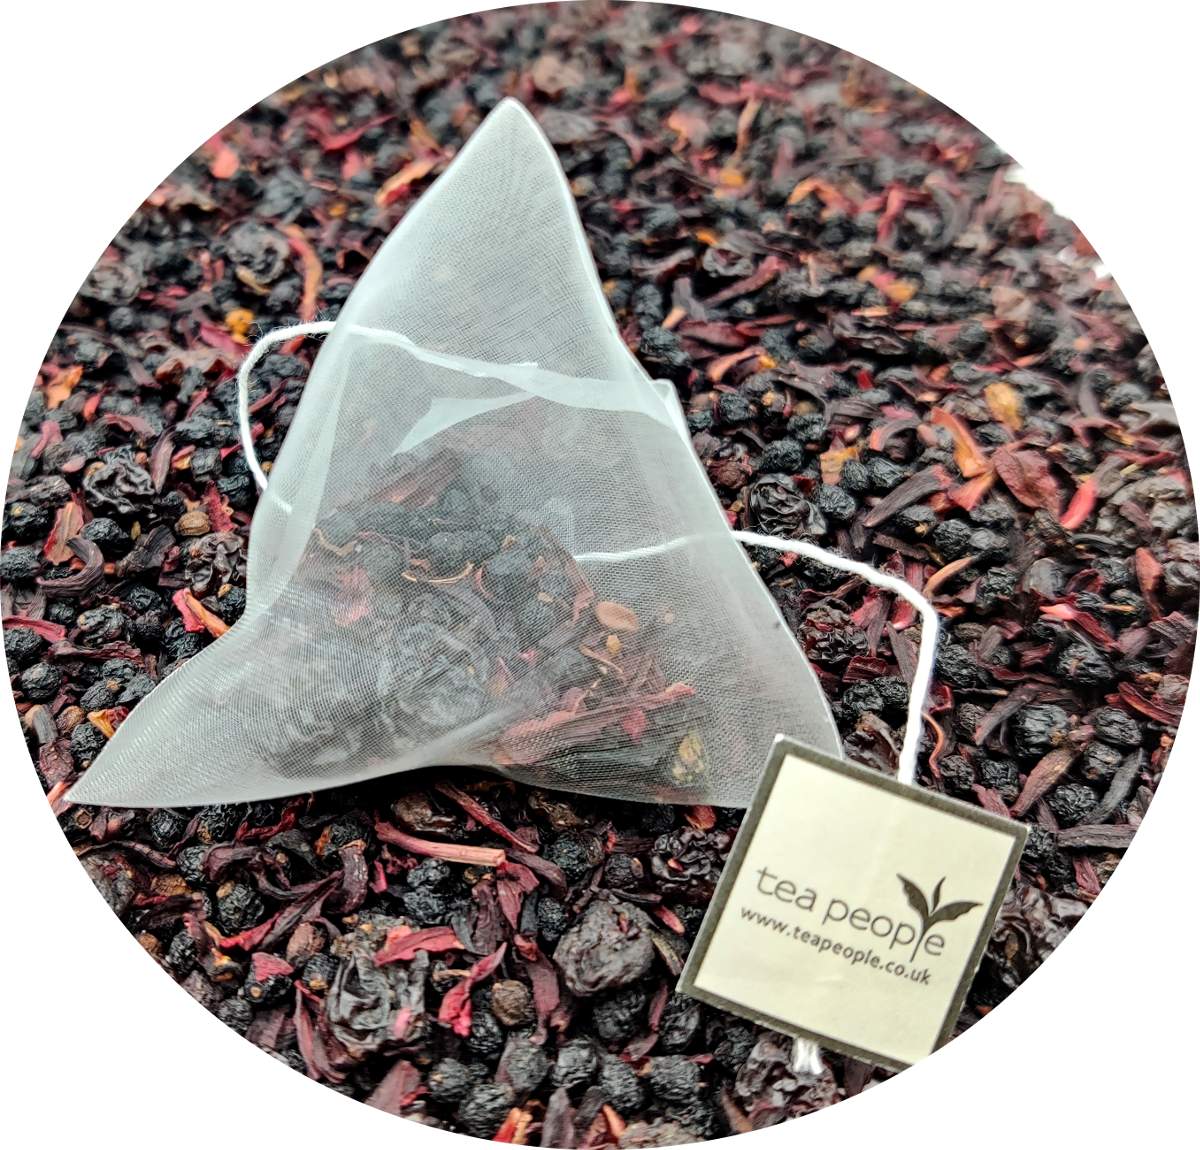 Organic Very Berry - Fruit Tea Pyramids